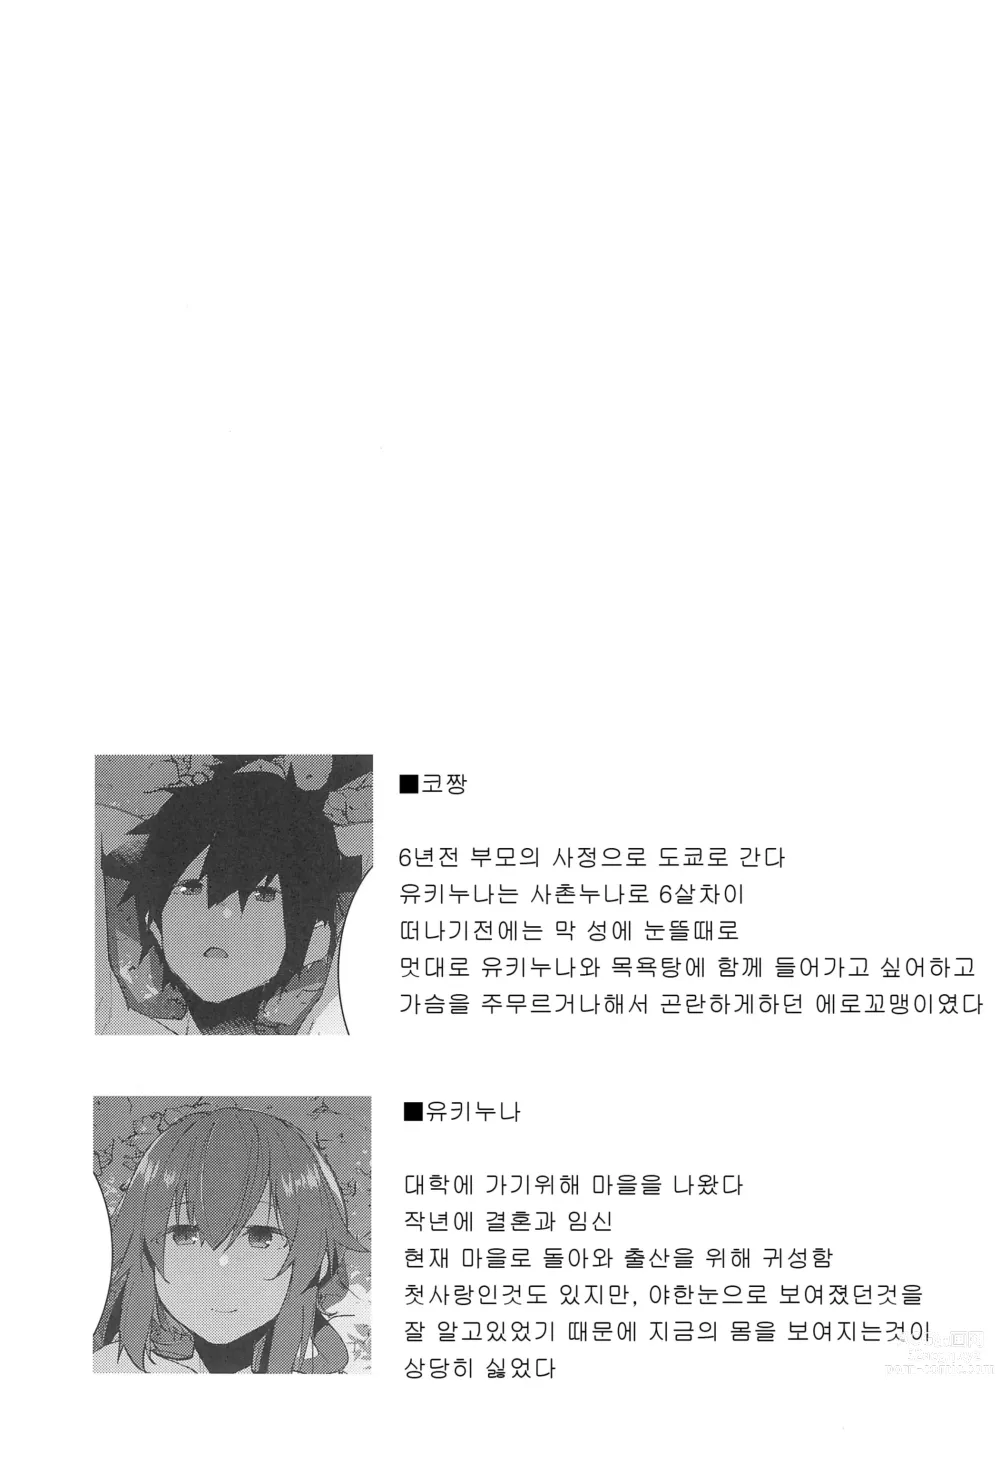 Page 38 of doujinshi 여름의 끝자락